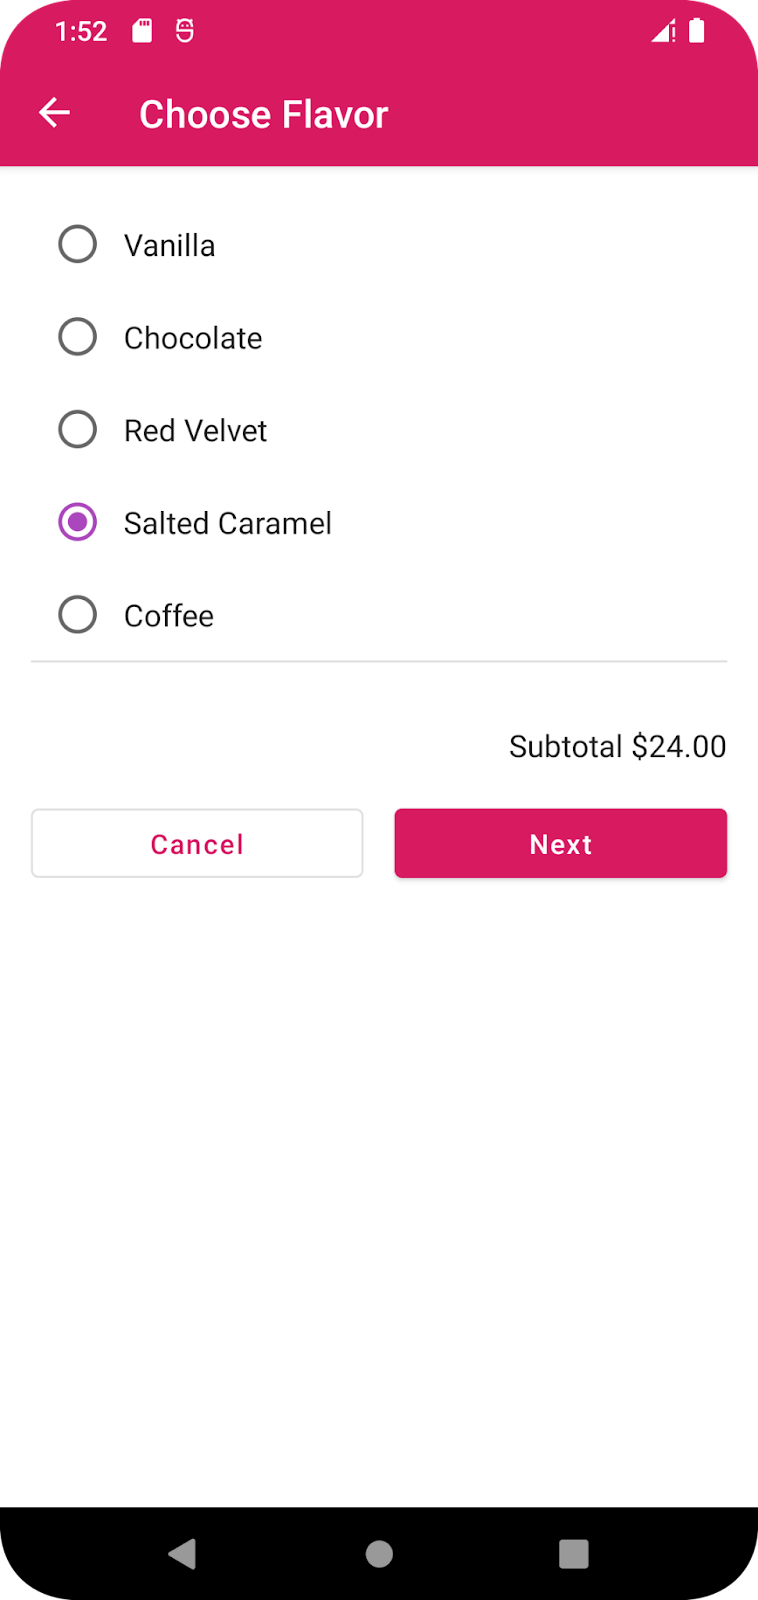 Cupcake 应用向用户显示不同口味的选项。